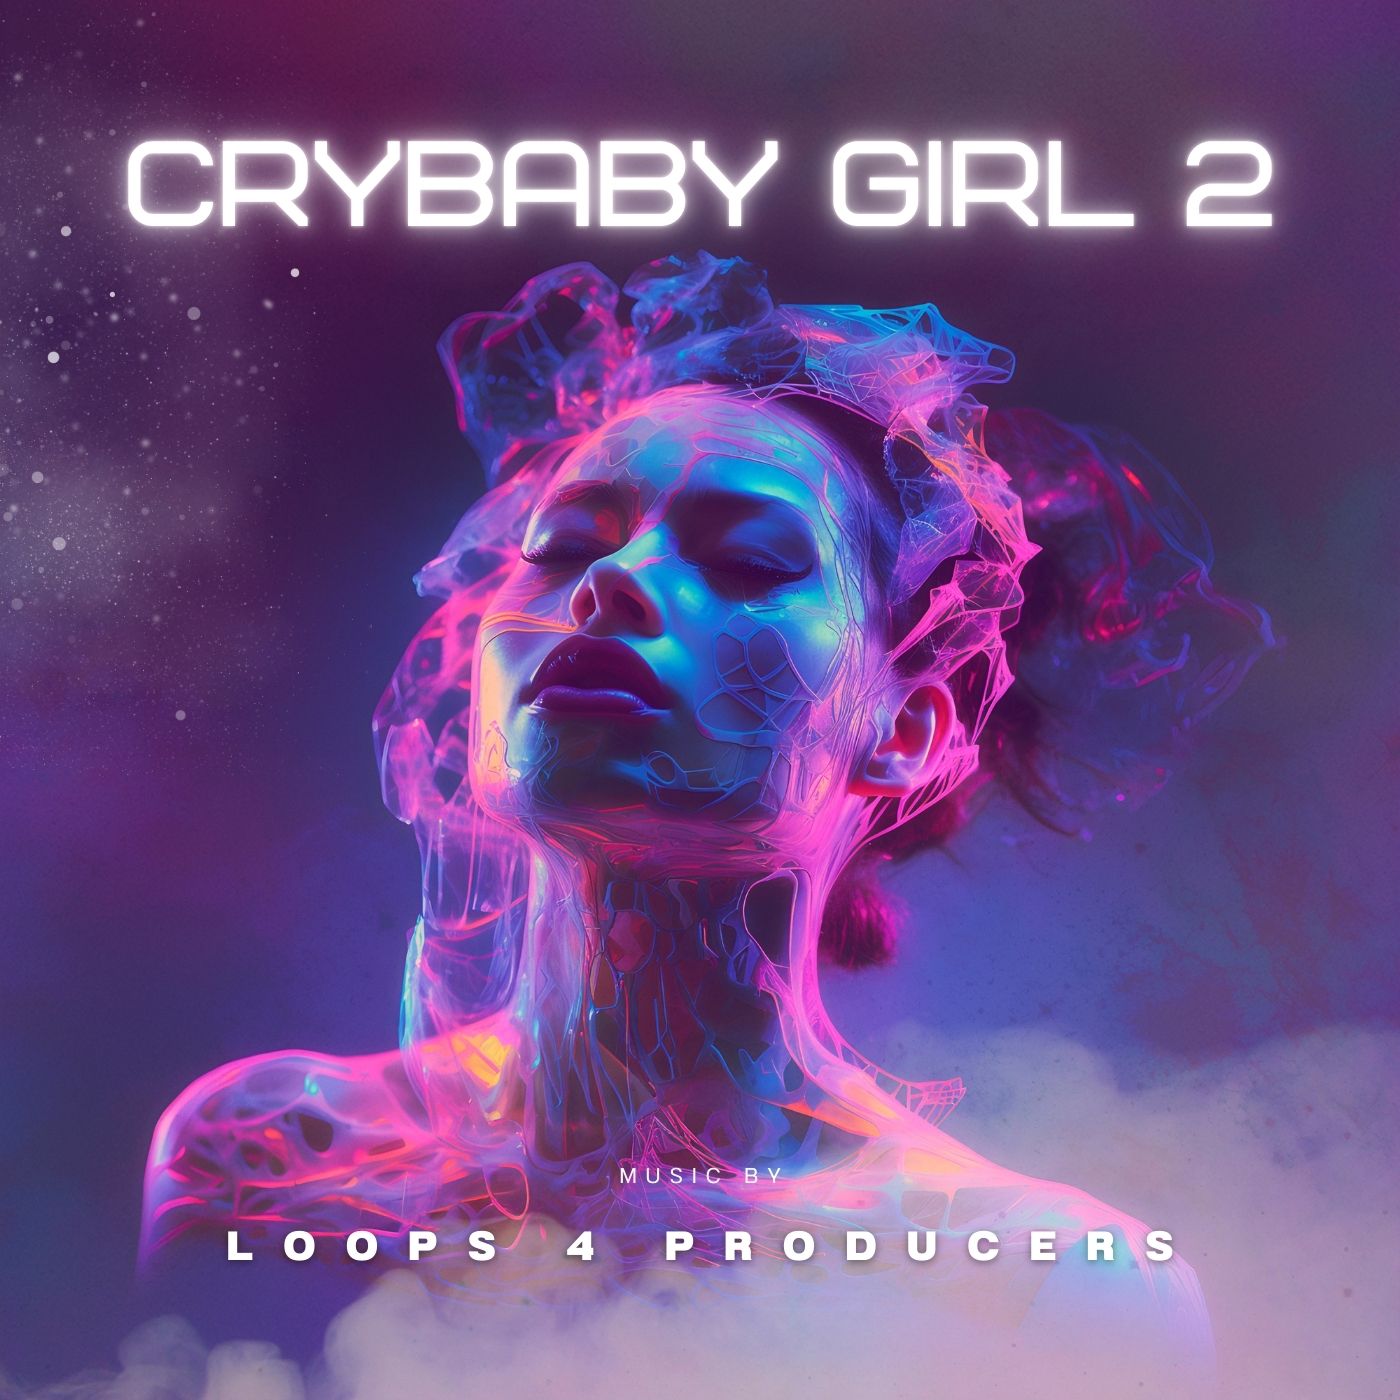 Crybaby Girl 2